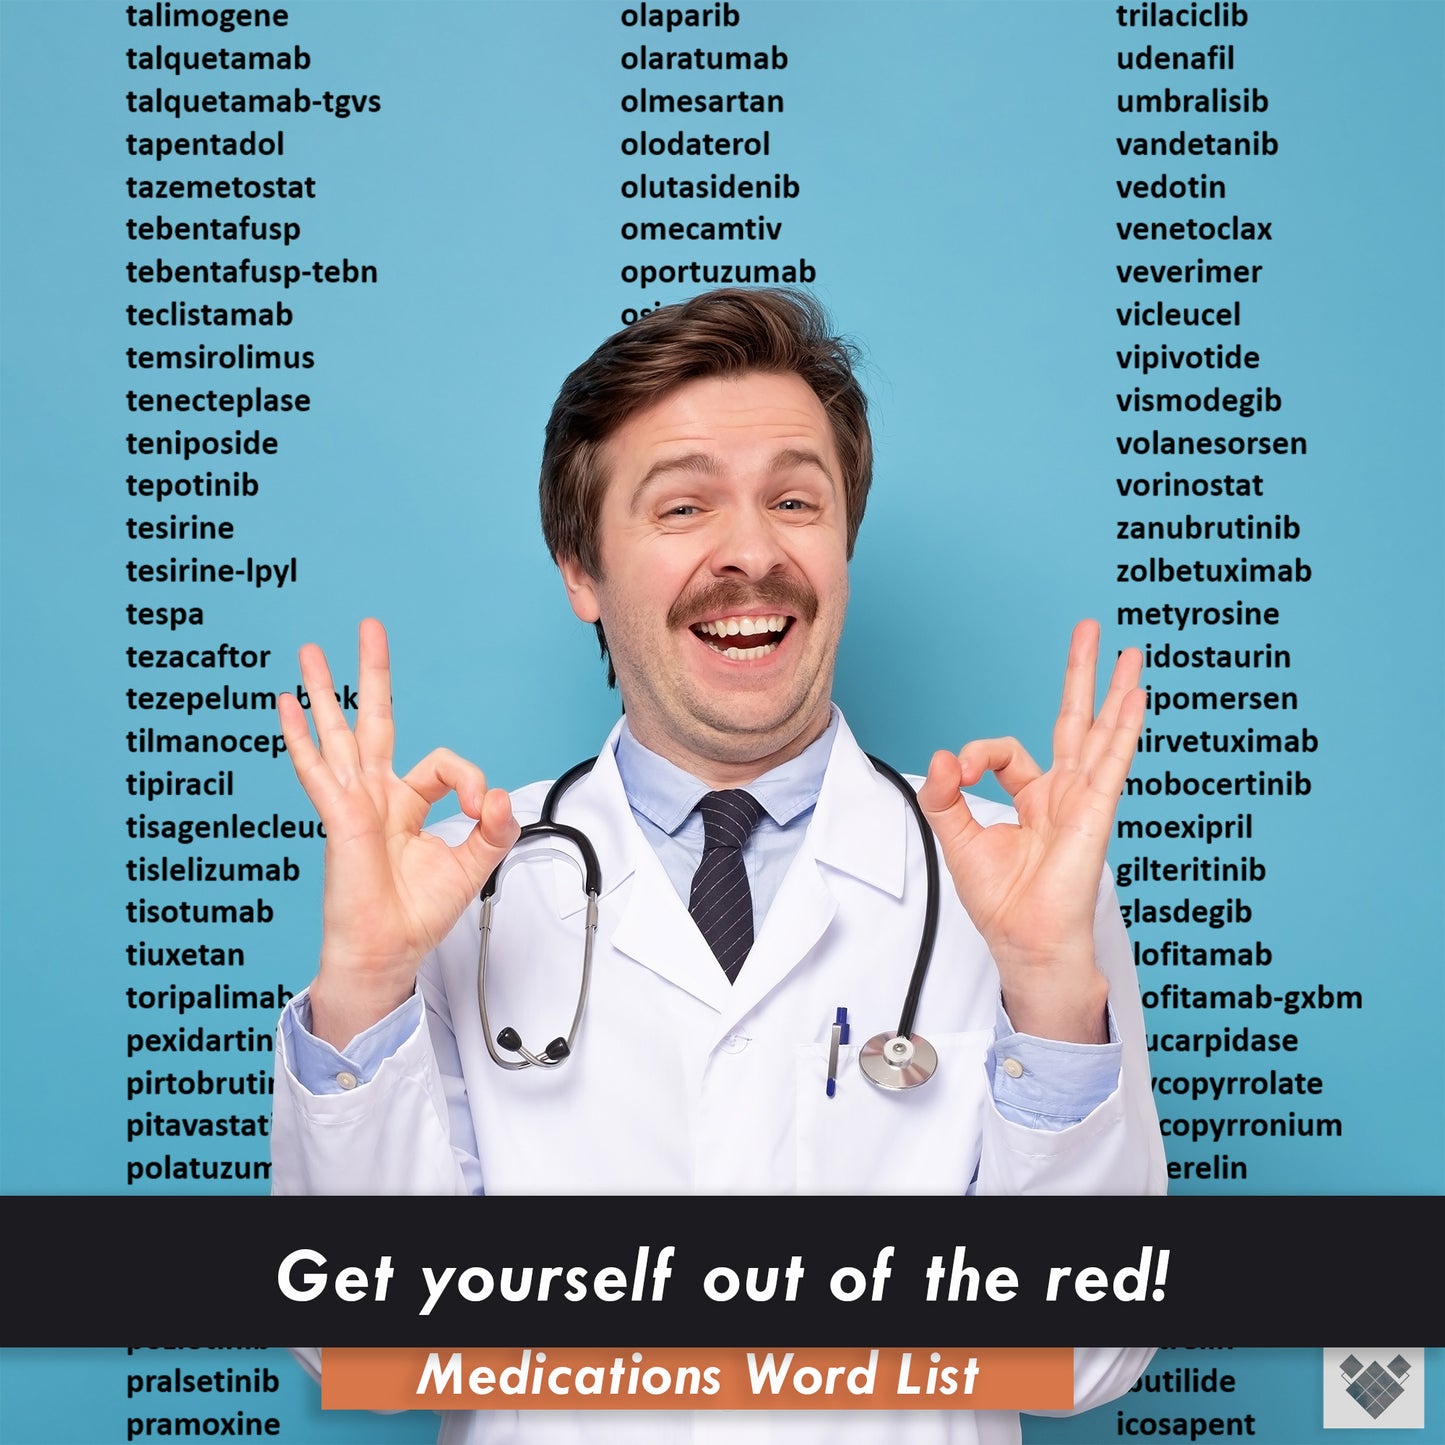 Medications Name Word List